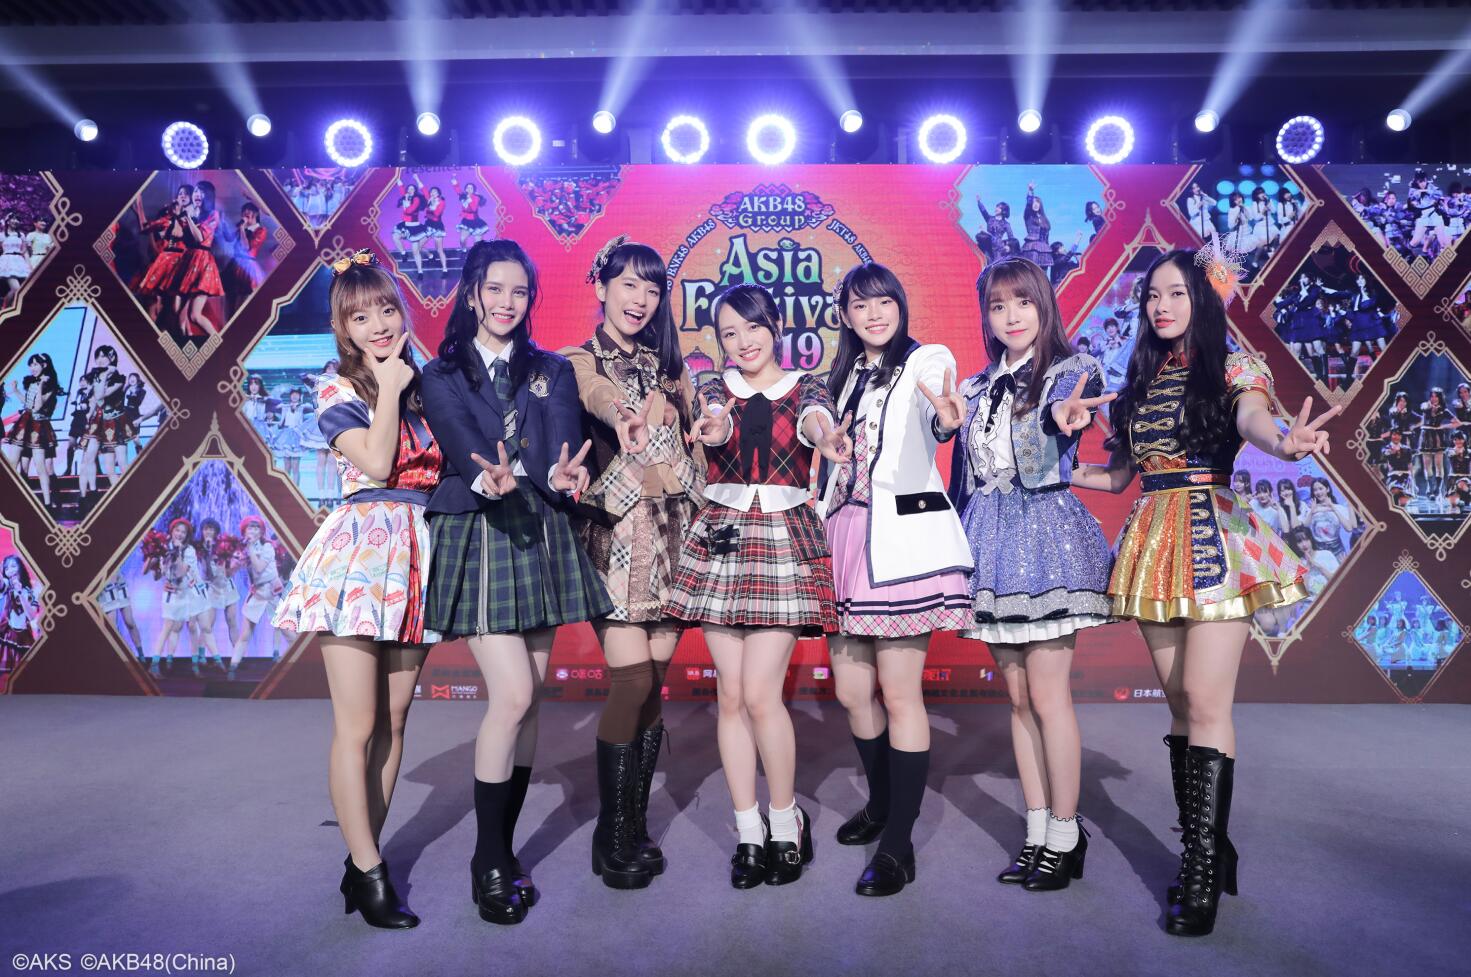 AKB48 Group亚洲盛典发布会上海举办 亚洲七大姐妹团燃爆魔都